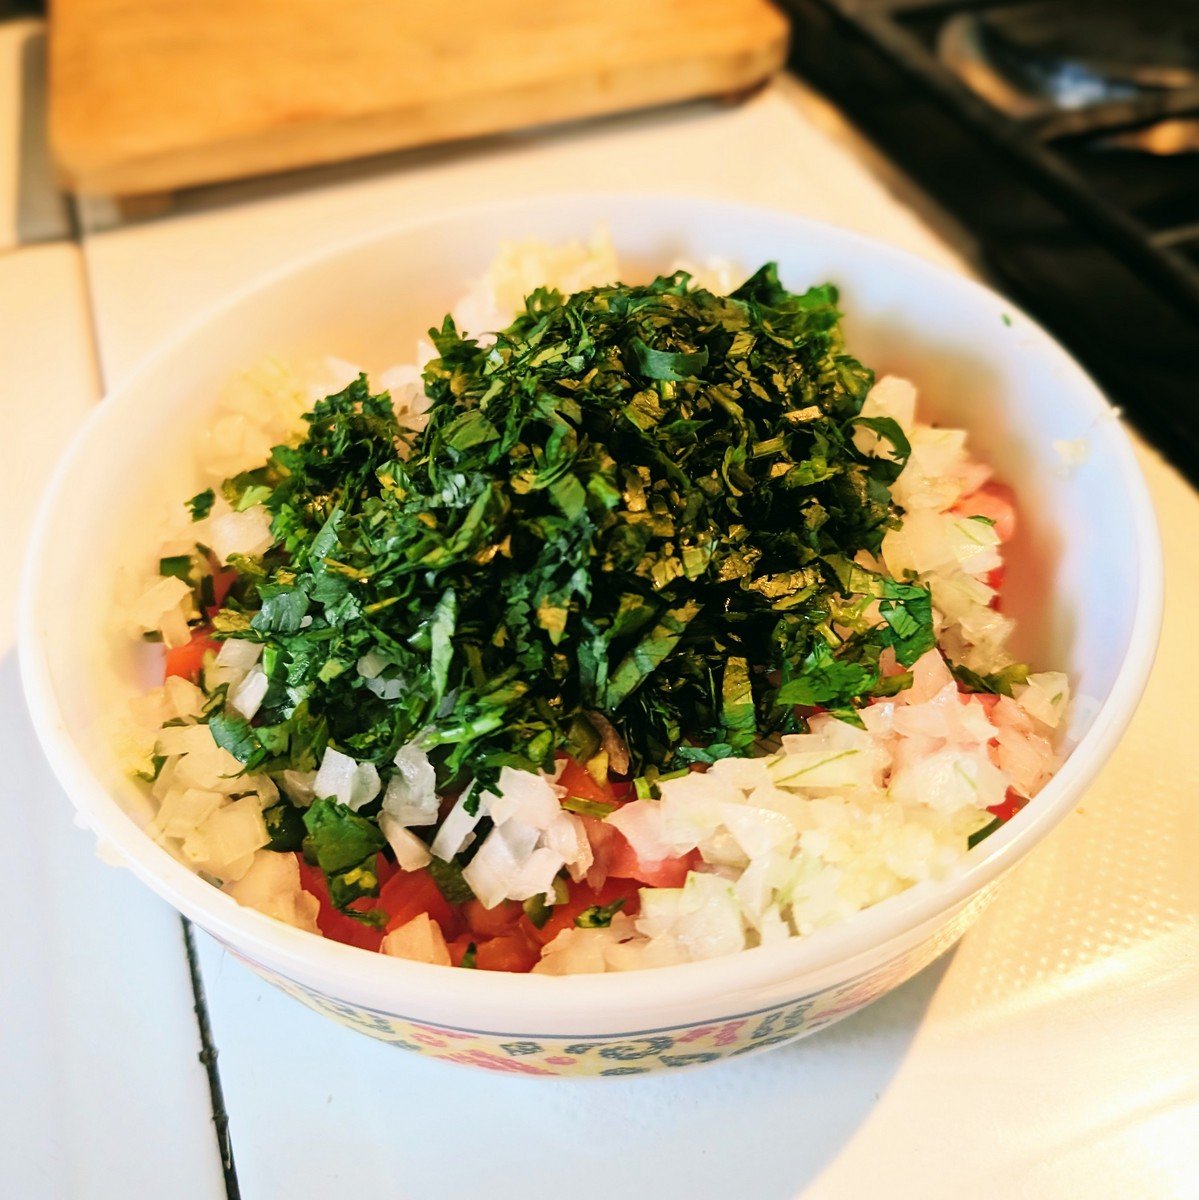 Adding chopped cilantro